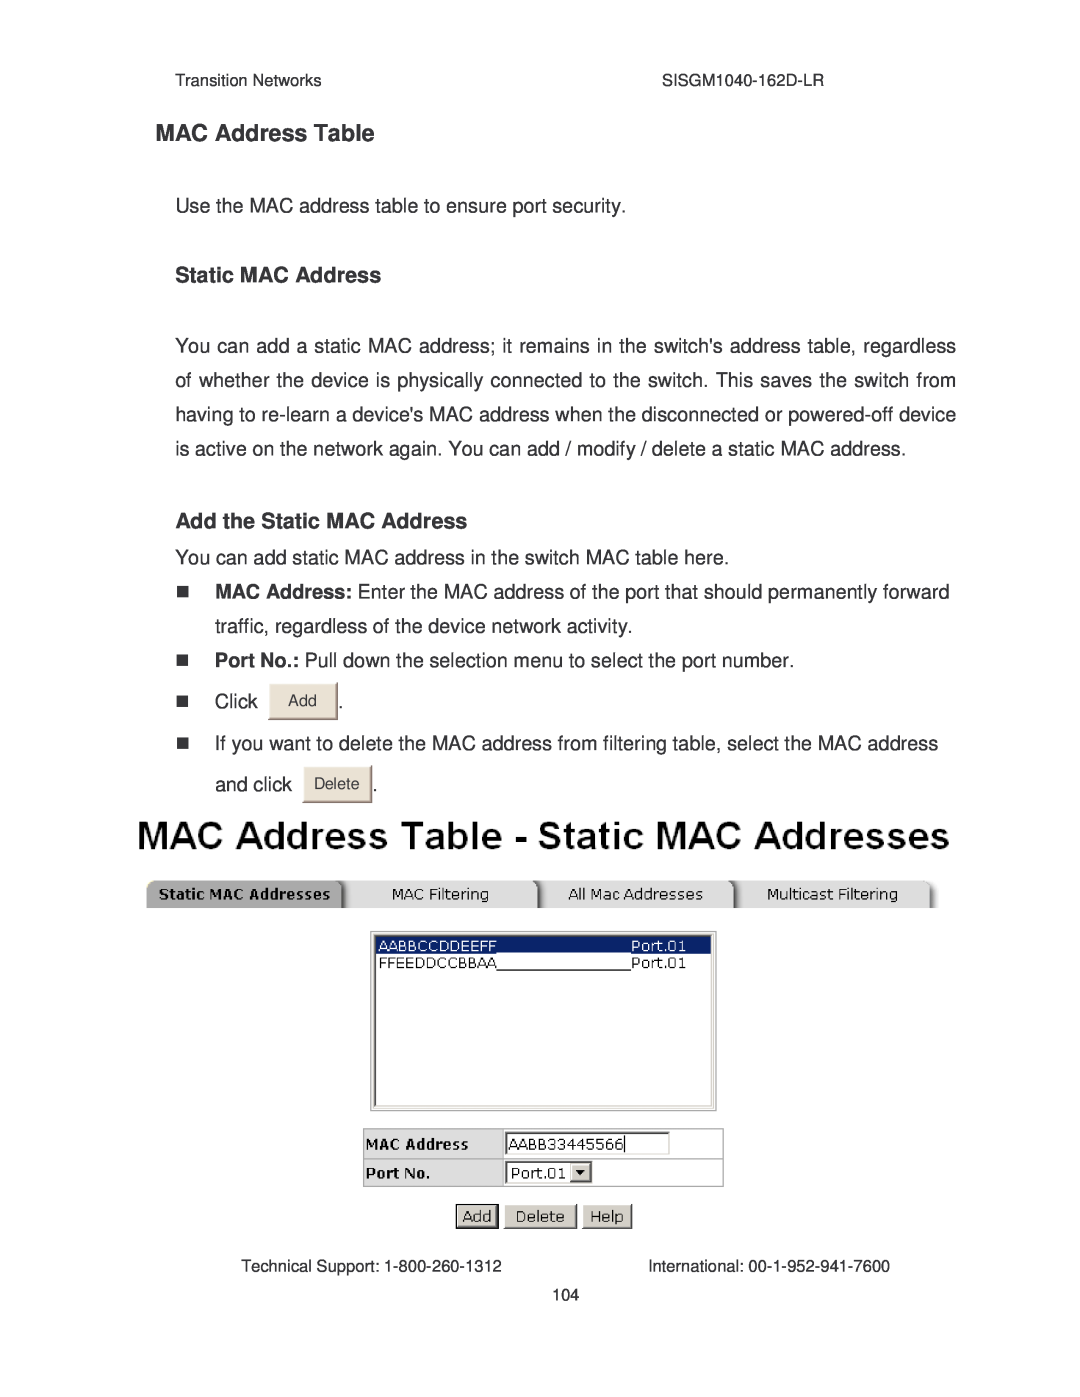 Transition Networks SISGM1040-162D manual MAC Address Table, Add the Static MAC Address 